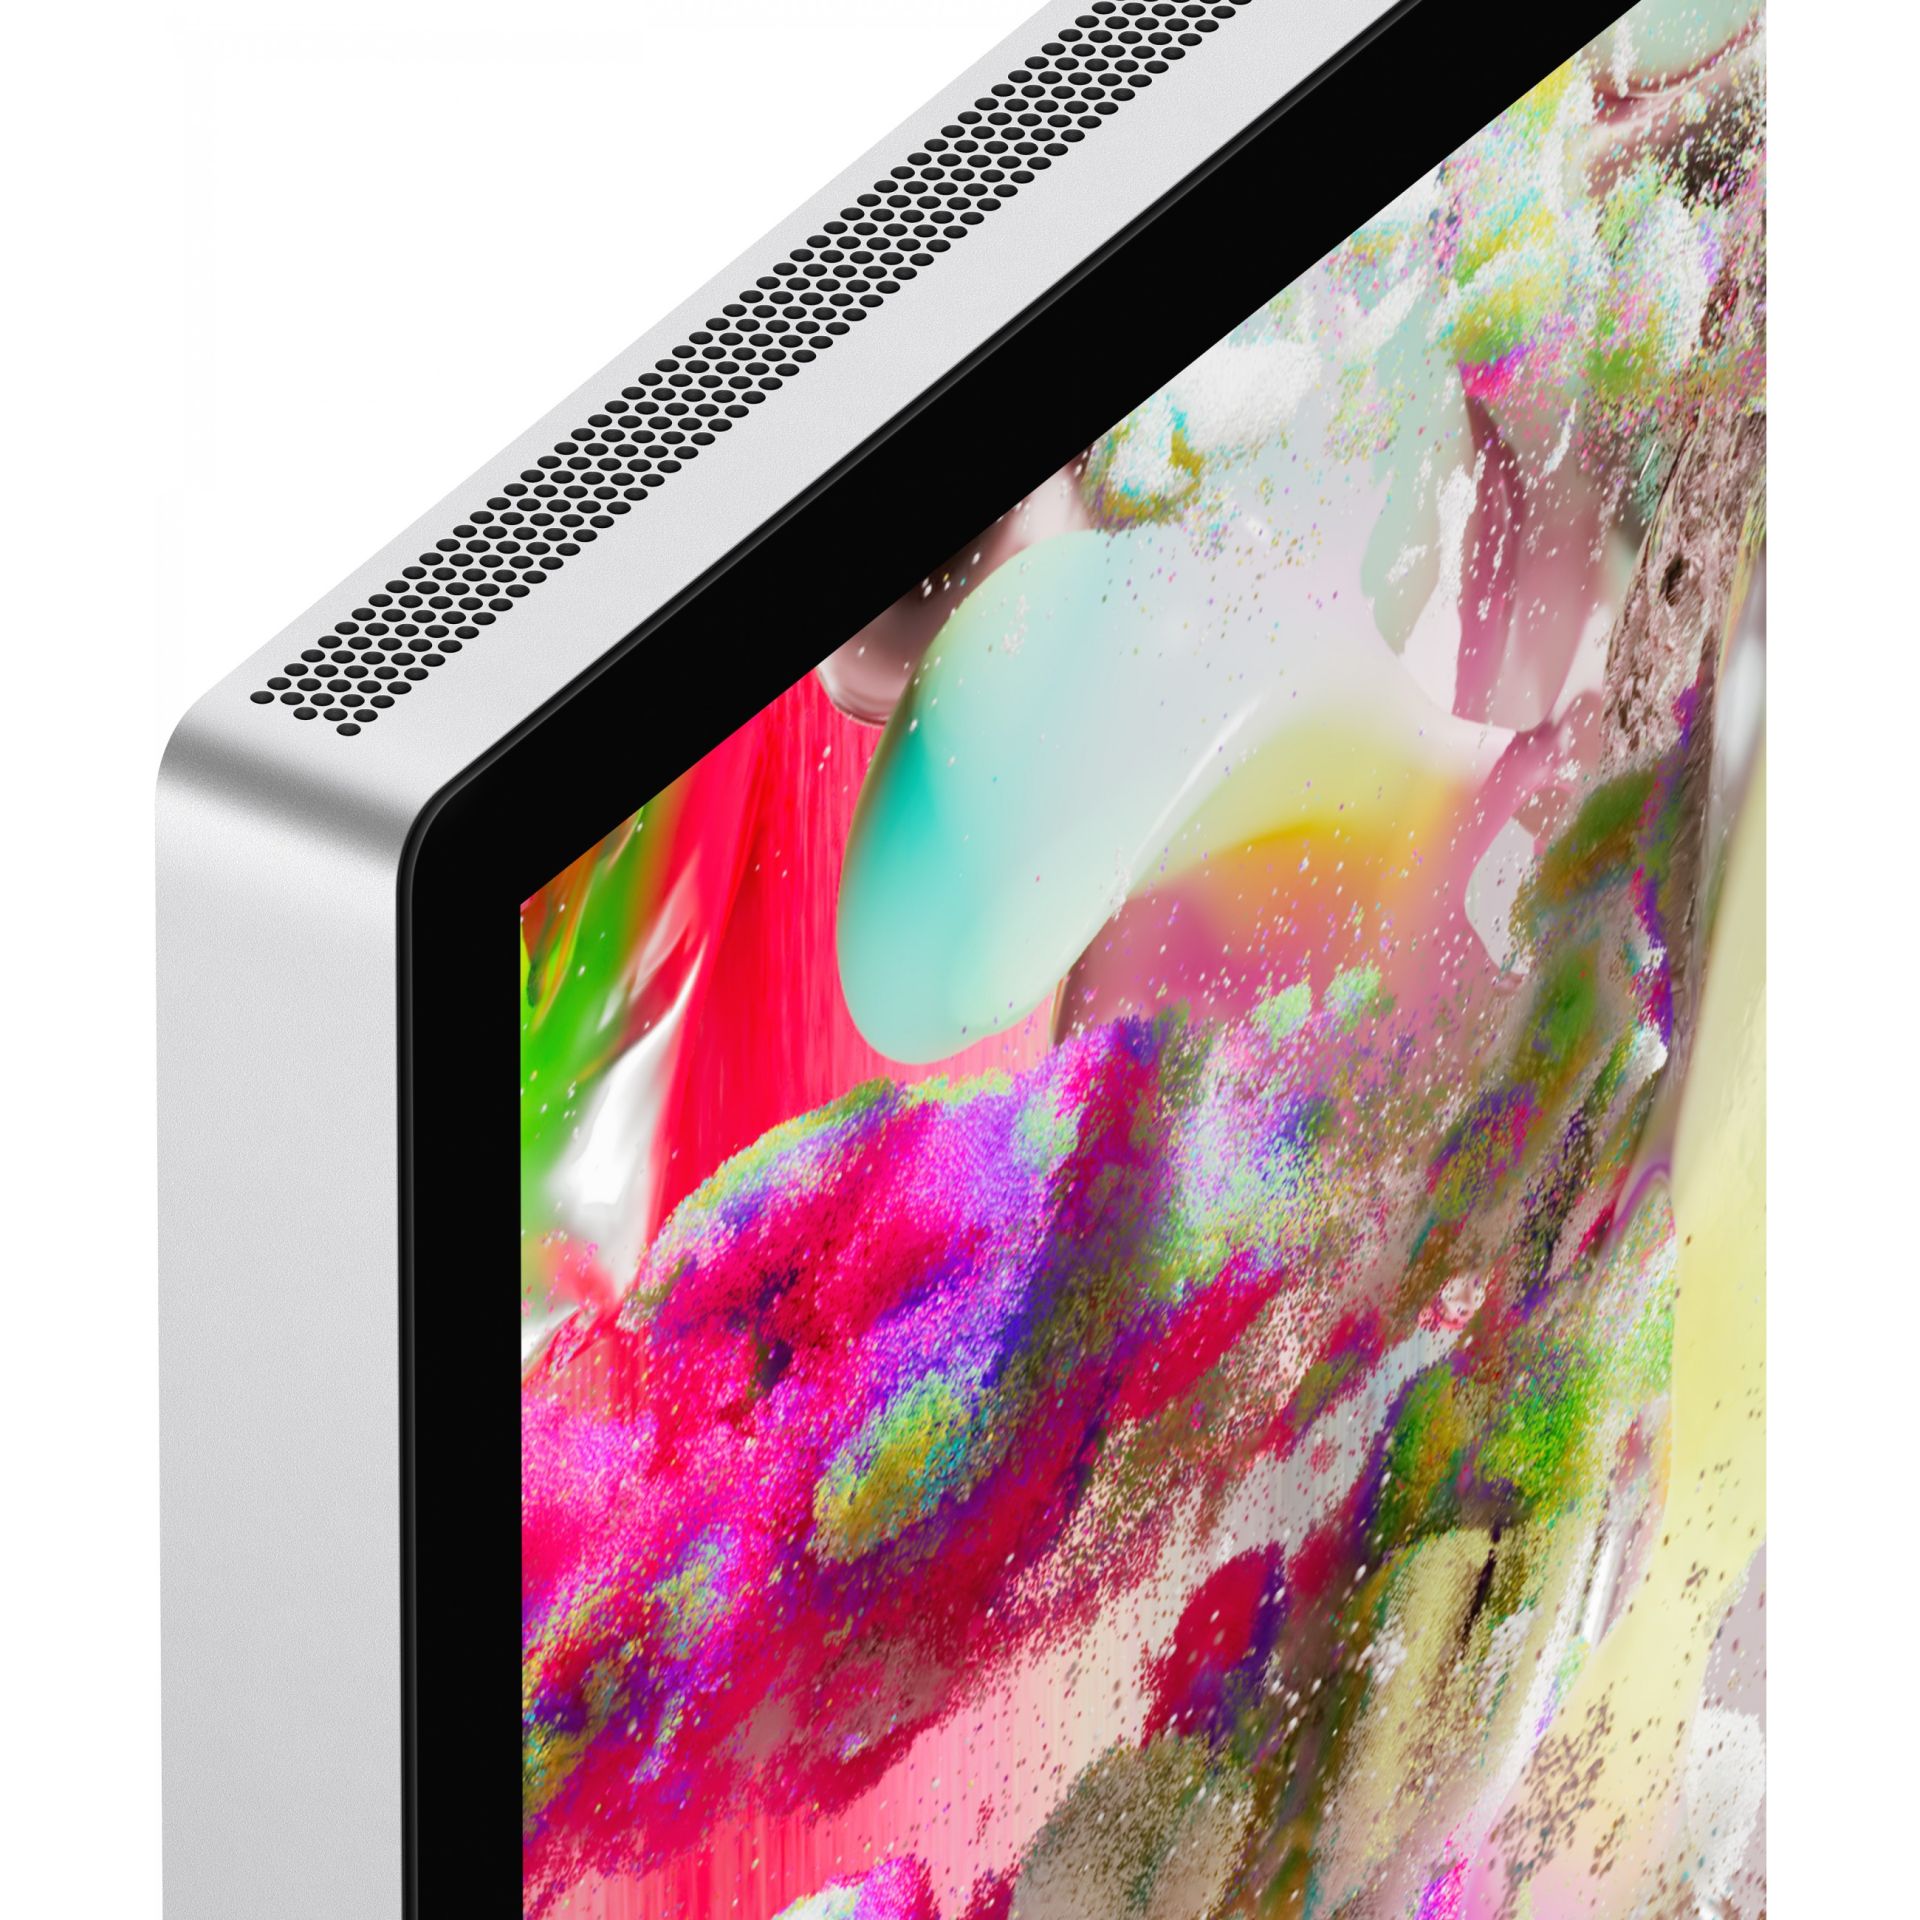 Apple Studio Display, 68,6 cm (27 Zoll), 5120 x 2880 Pixel, 5K Ultra HD, Silber